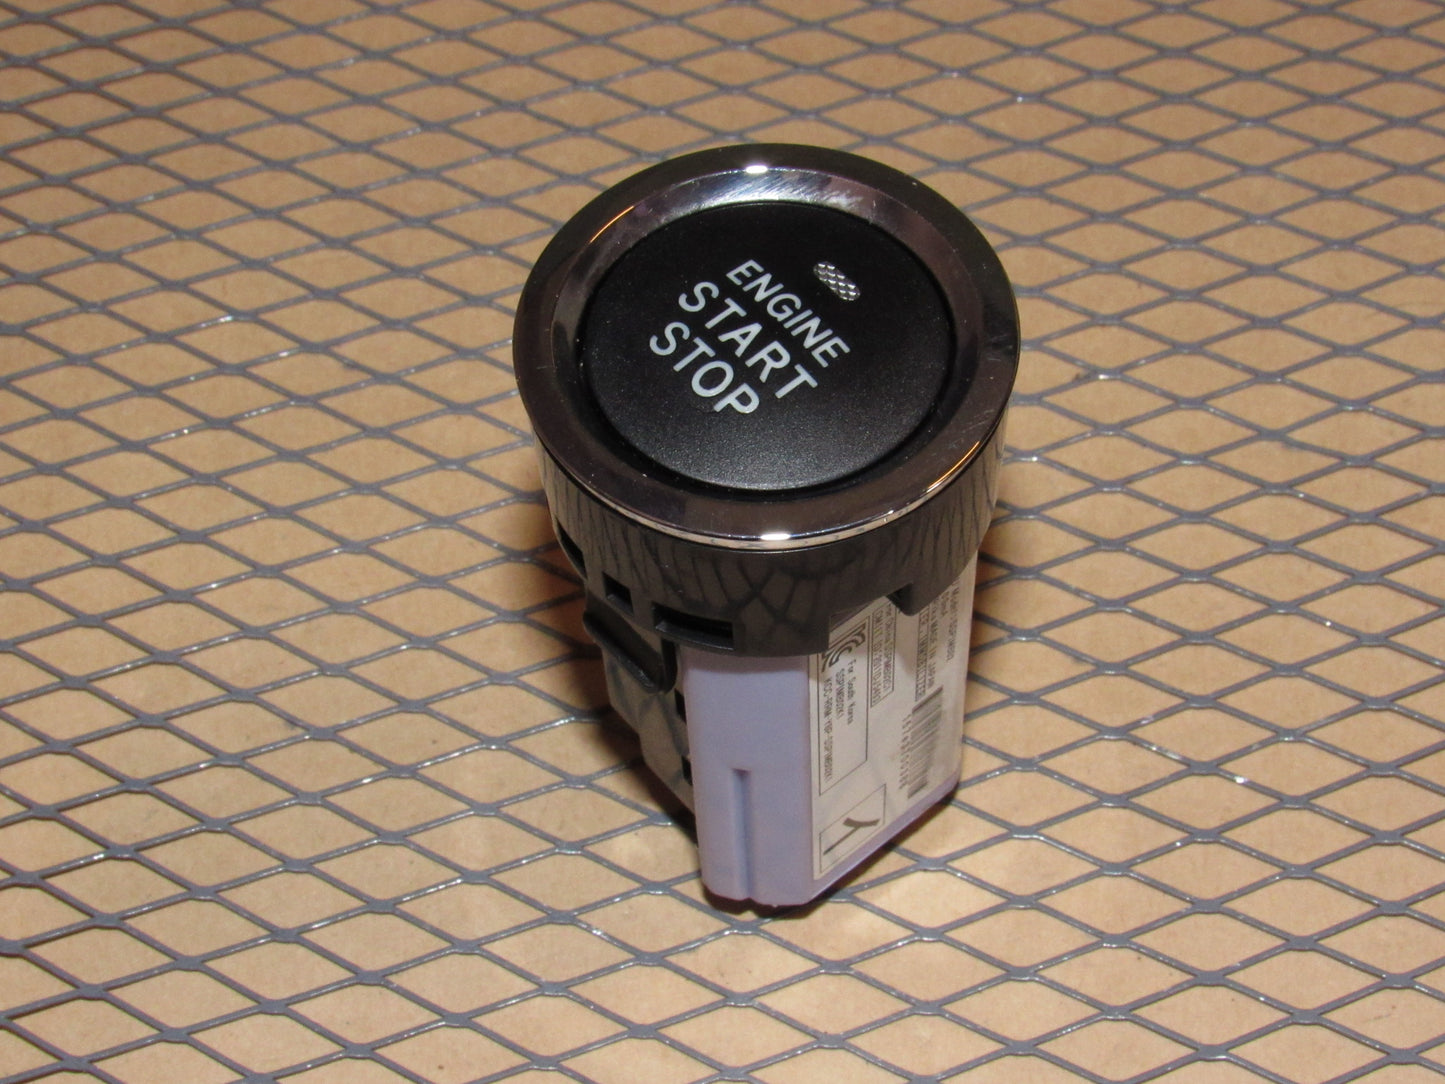 17 18 19 20 21 Subaru WRX OEM Ignition Engine Start Stop Push Button Switch